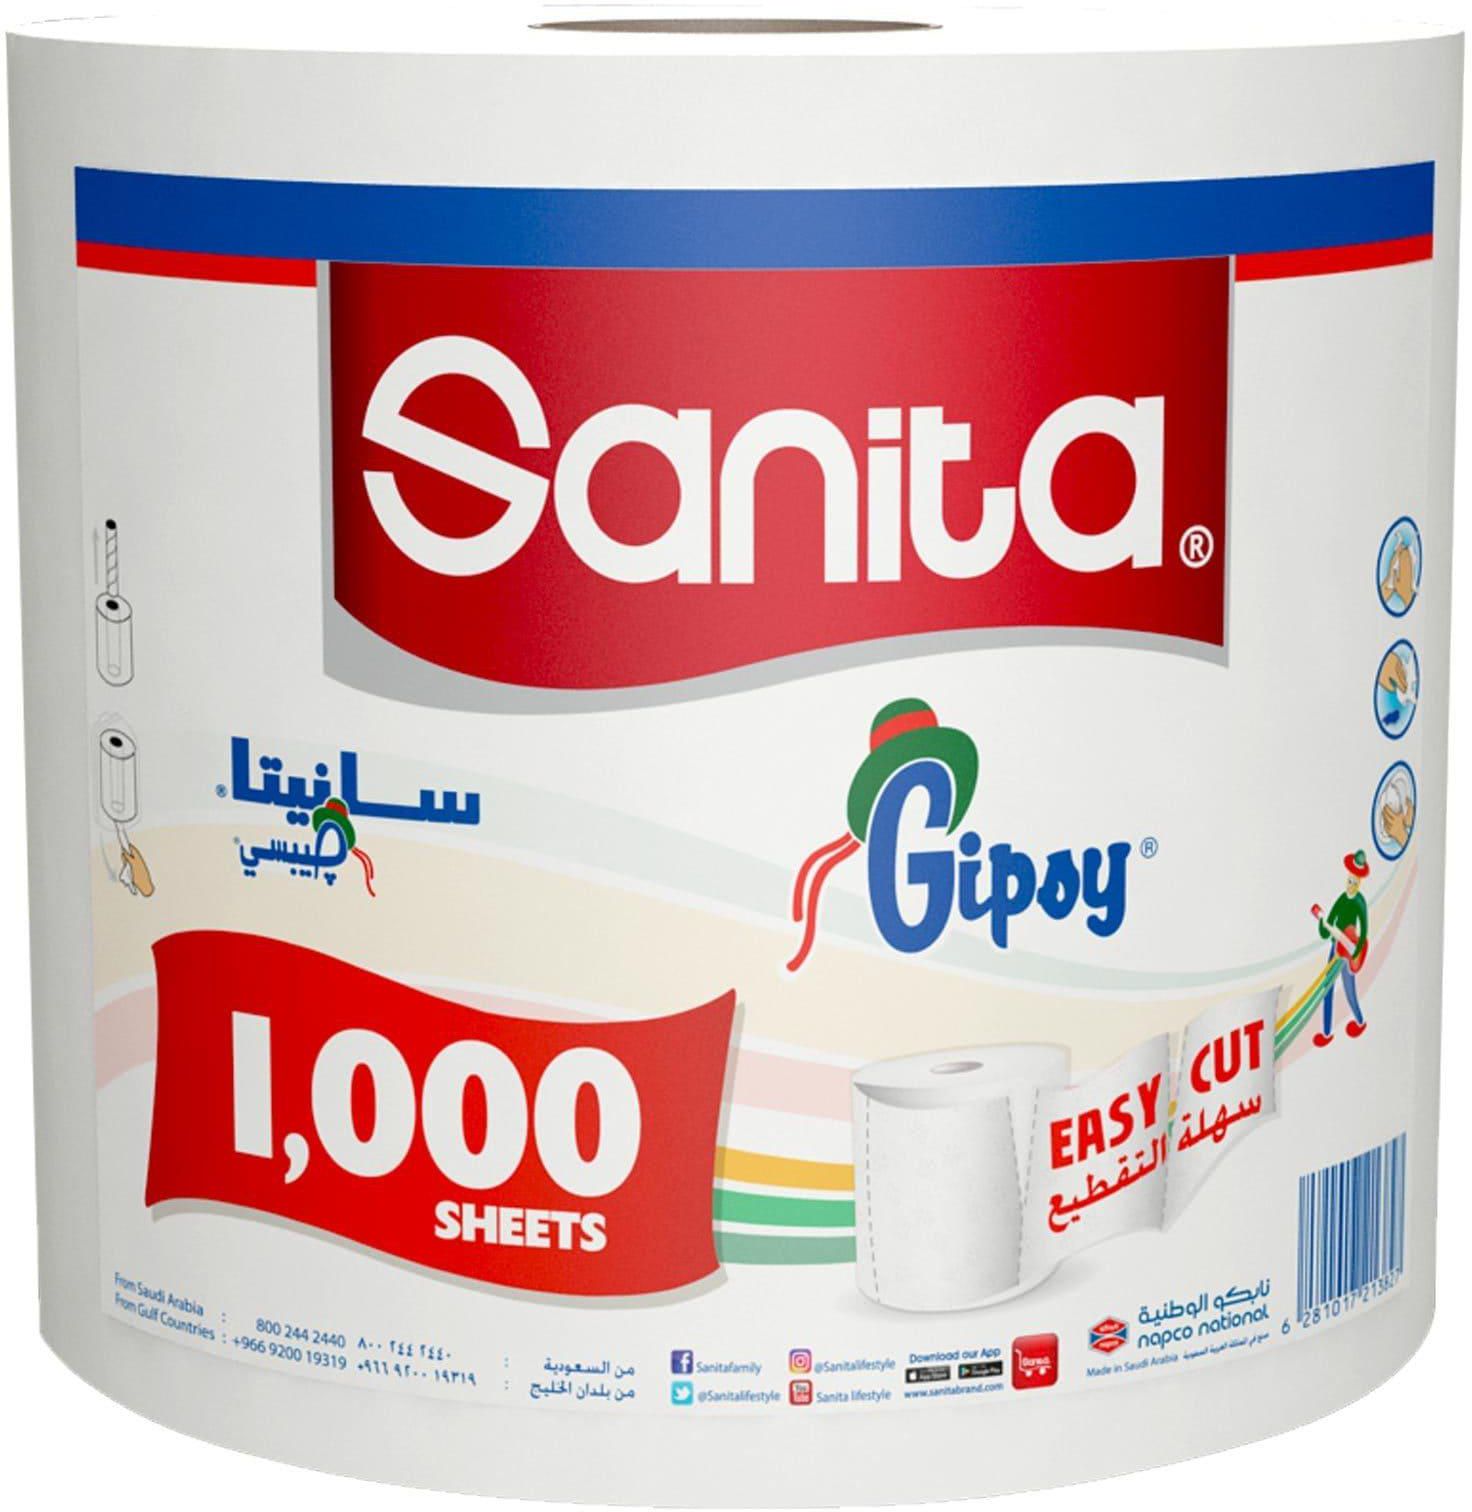 Sanita gipsy maxi roll 1000 sheet